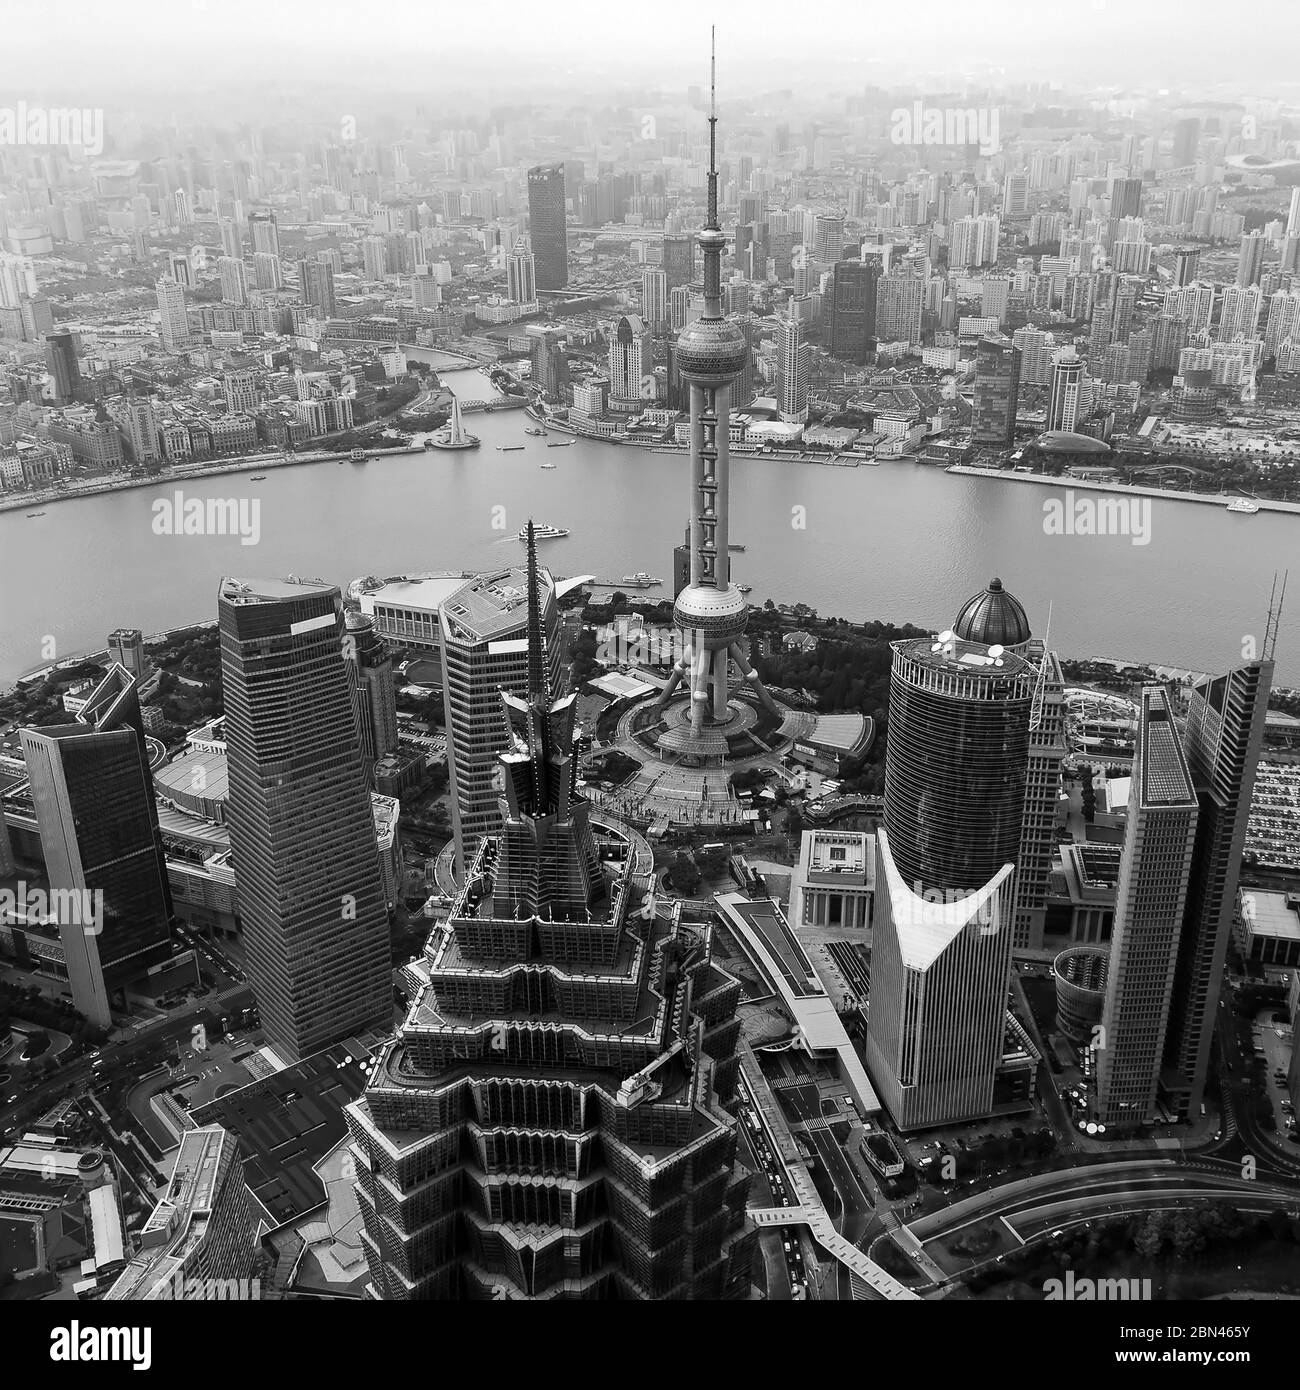 Urban skyline of Shanghai in black and white, China. Stock Photo